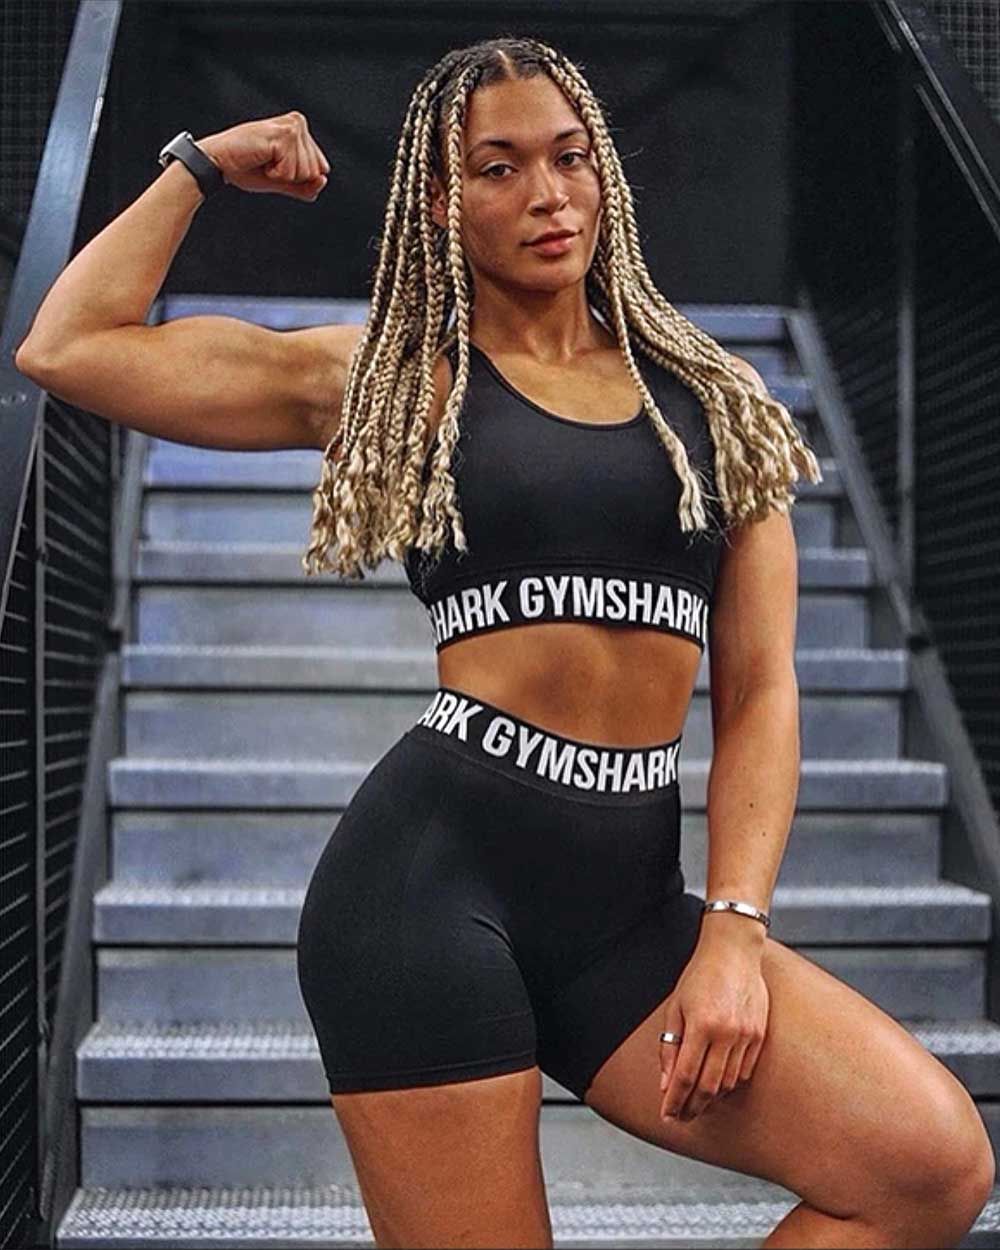 Gymshark cheap workout clothes for women